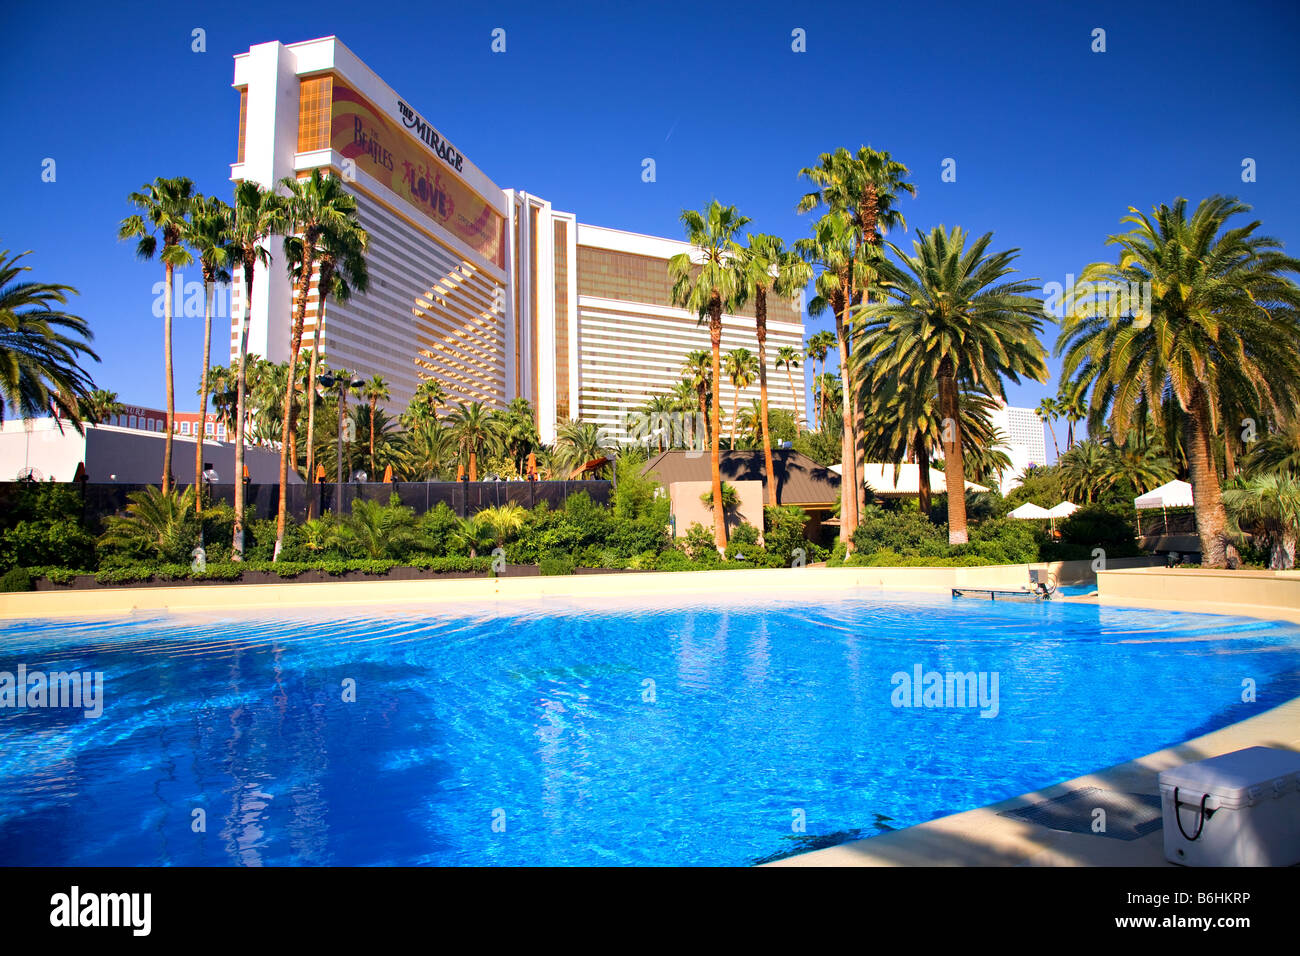 Pools in Las Vegas - The Mirage Pool - The Mirage